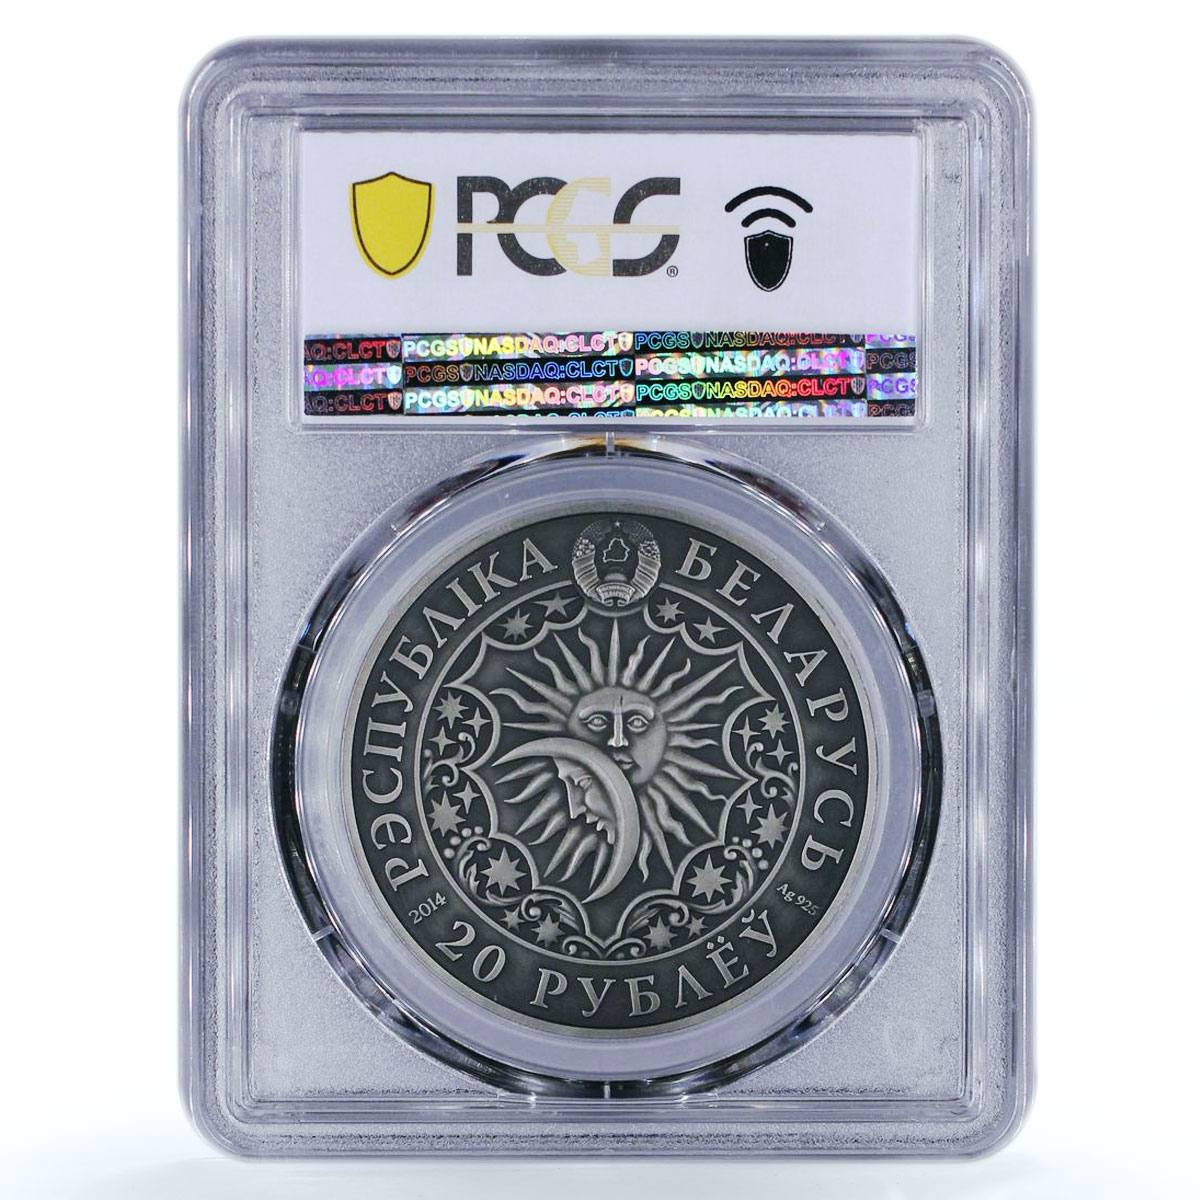 Belarus 20 rubles Zodiac Singns series Taurus MS70 PCGS silver coin 2014